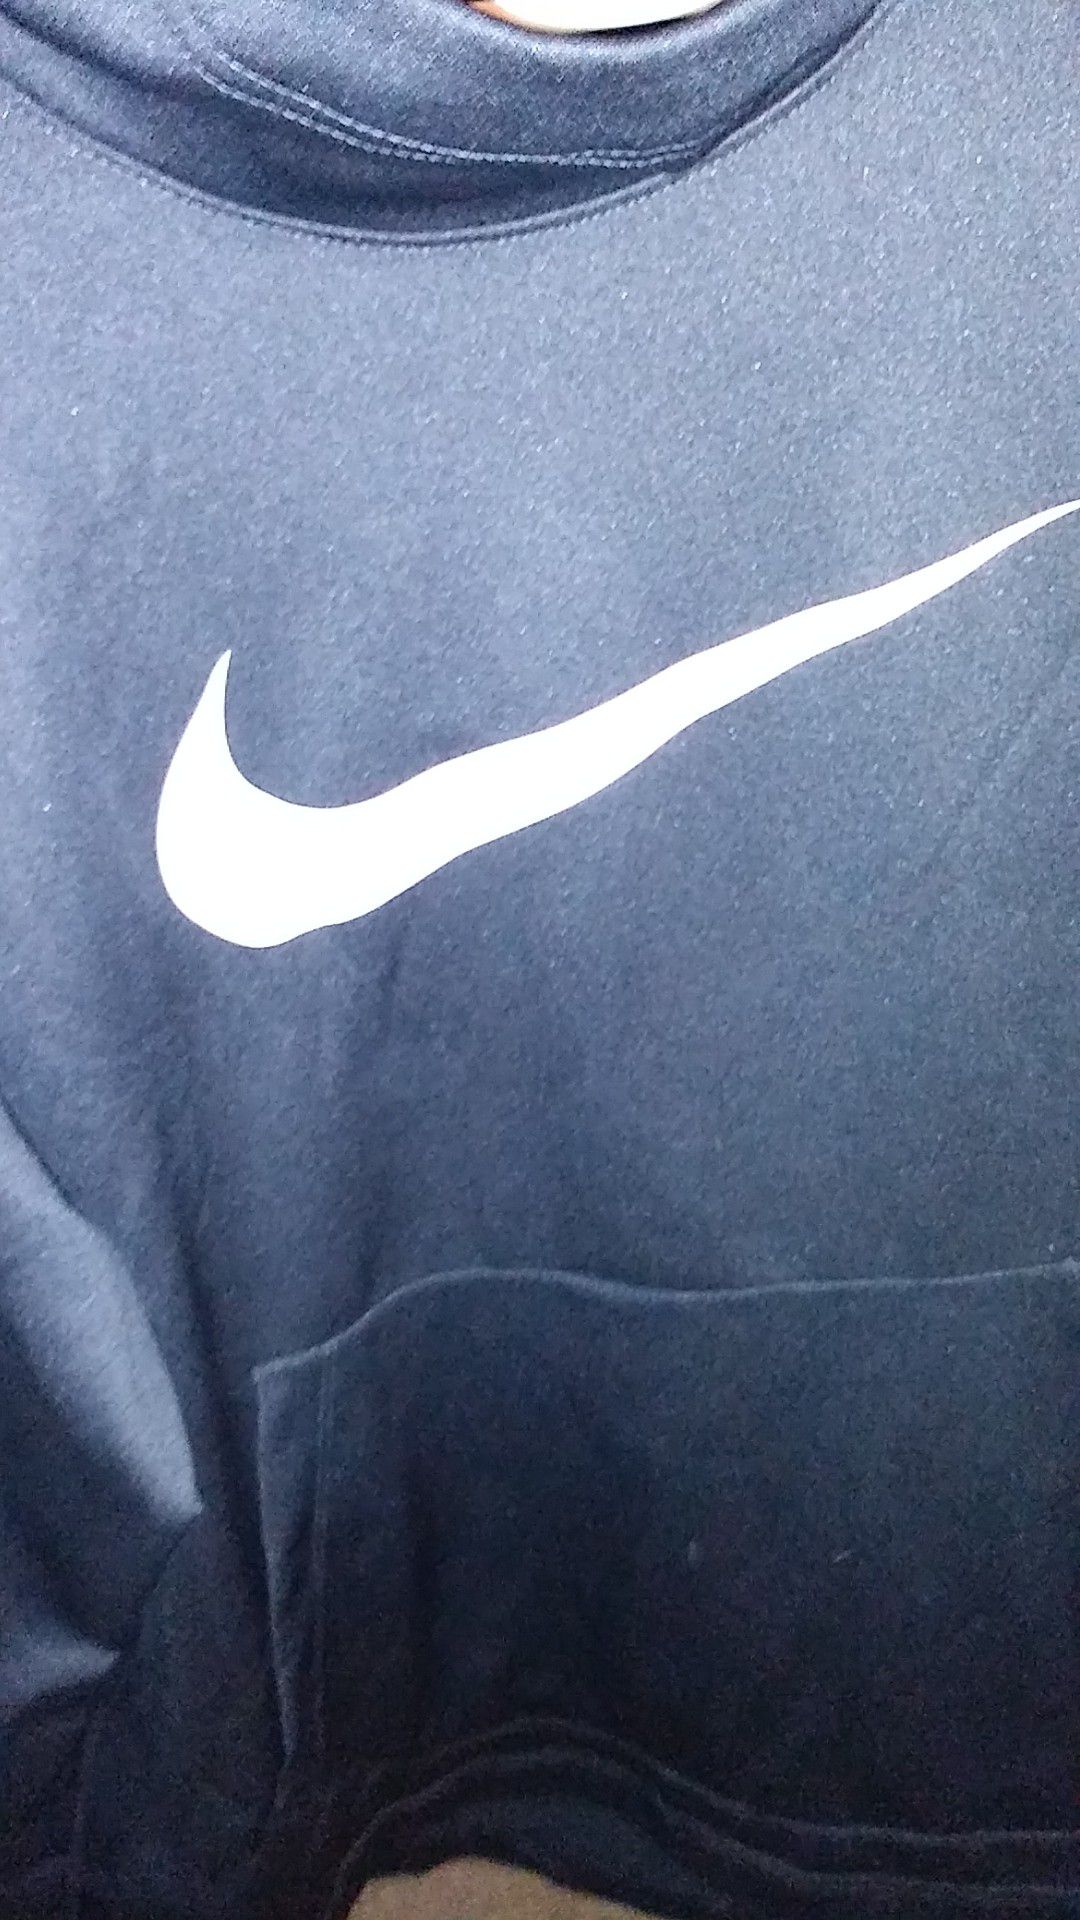 Black Therma Nike hoodie brand new XL